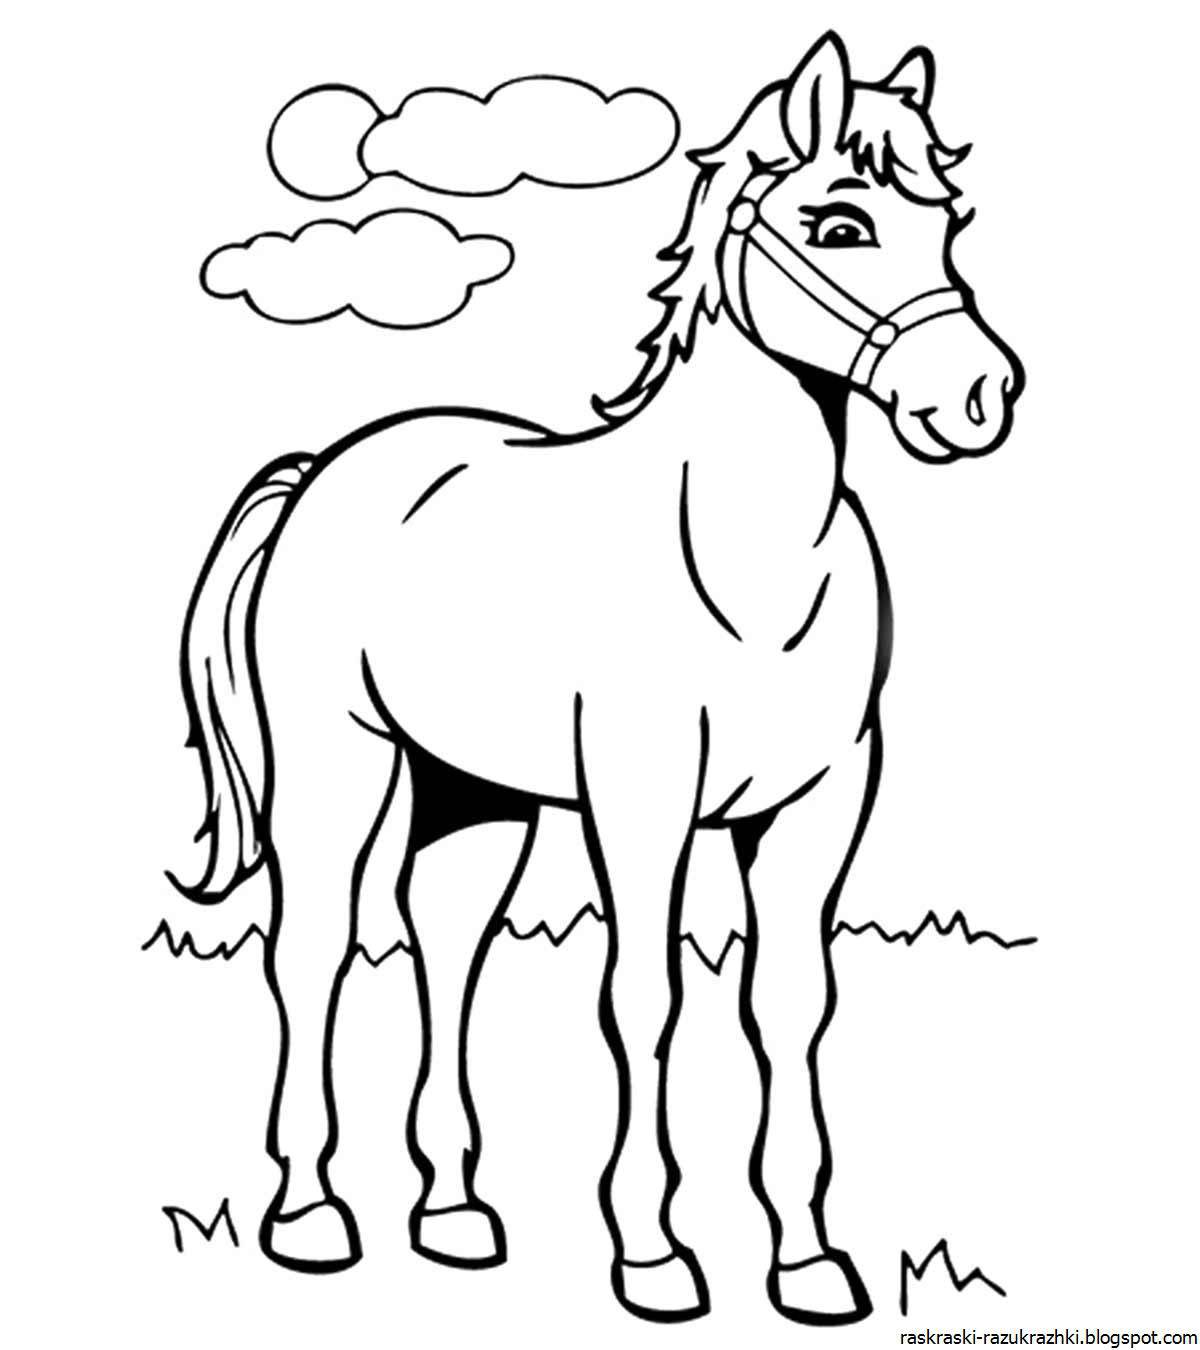 Playful Akhal-Teke horse coloring book for kids